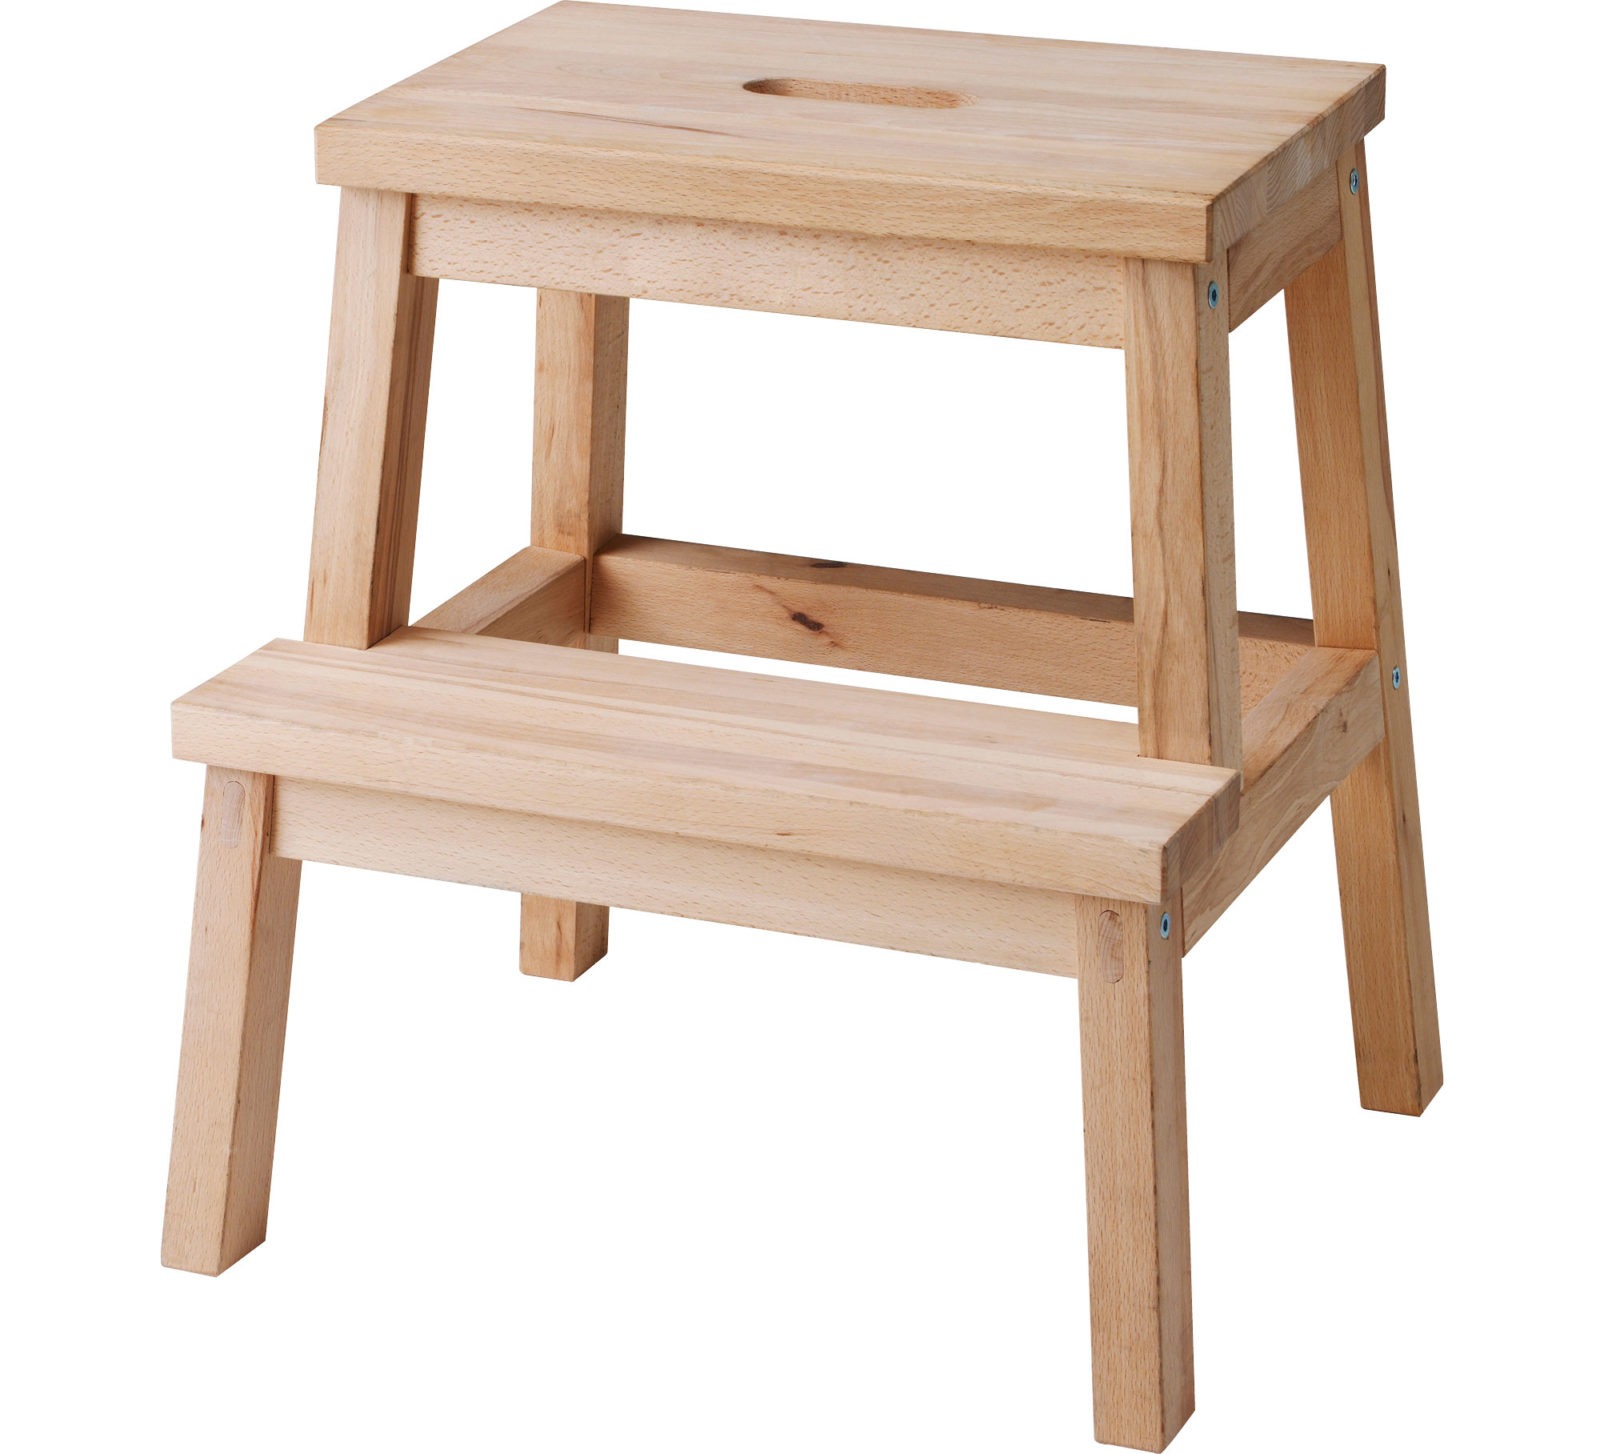 A step stool made of solid wood, BEKVÄM.